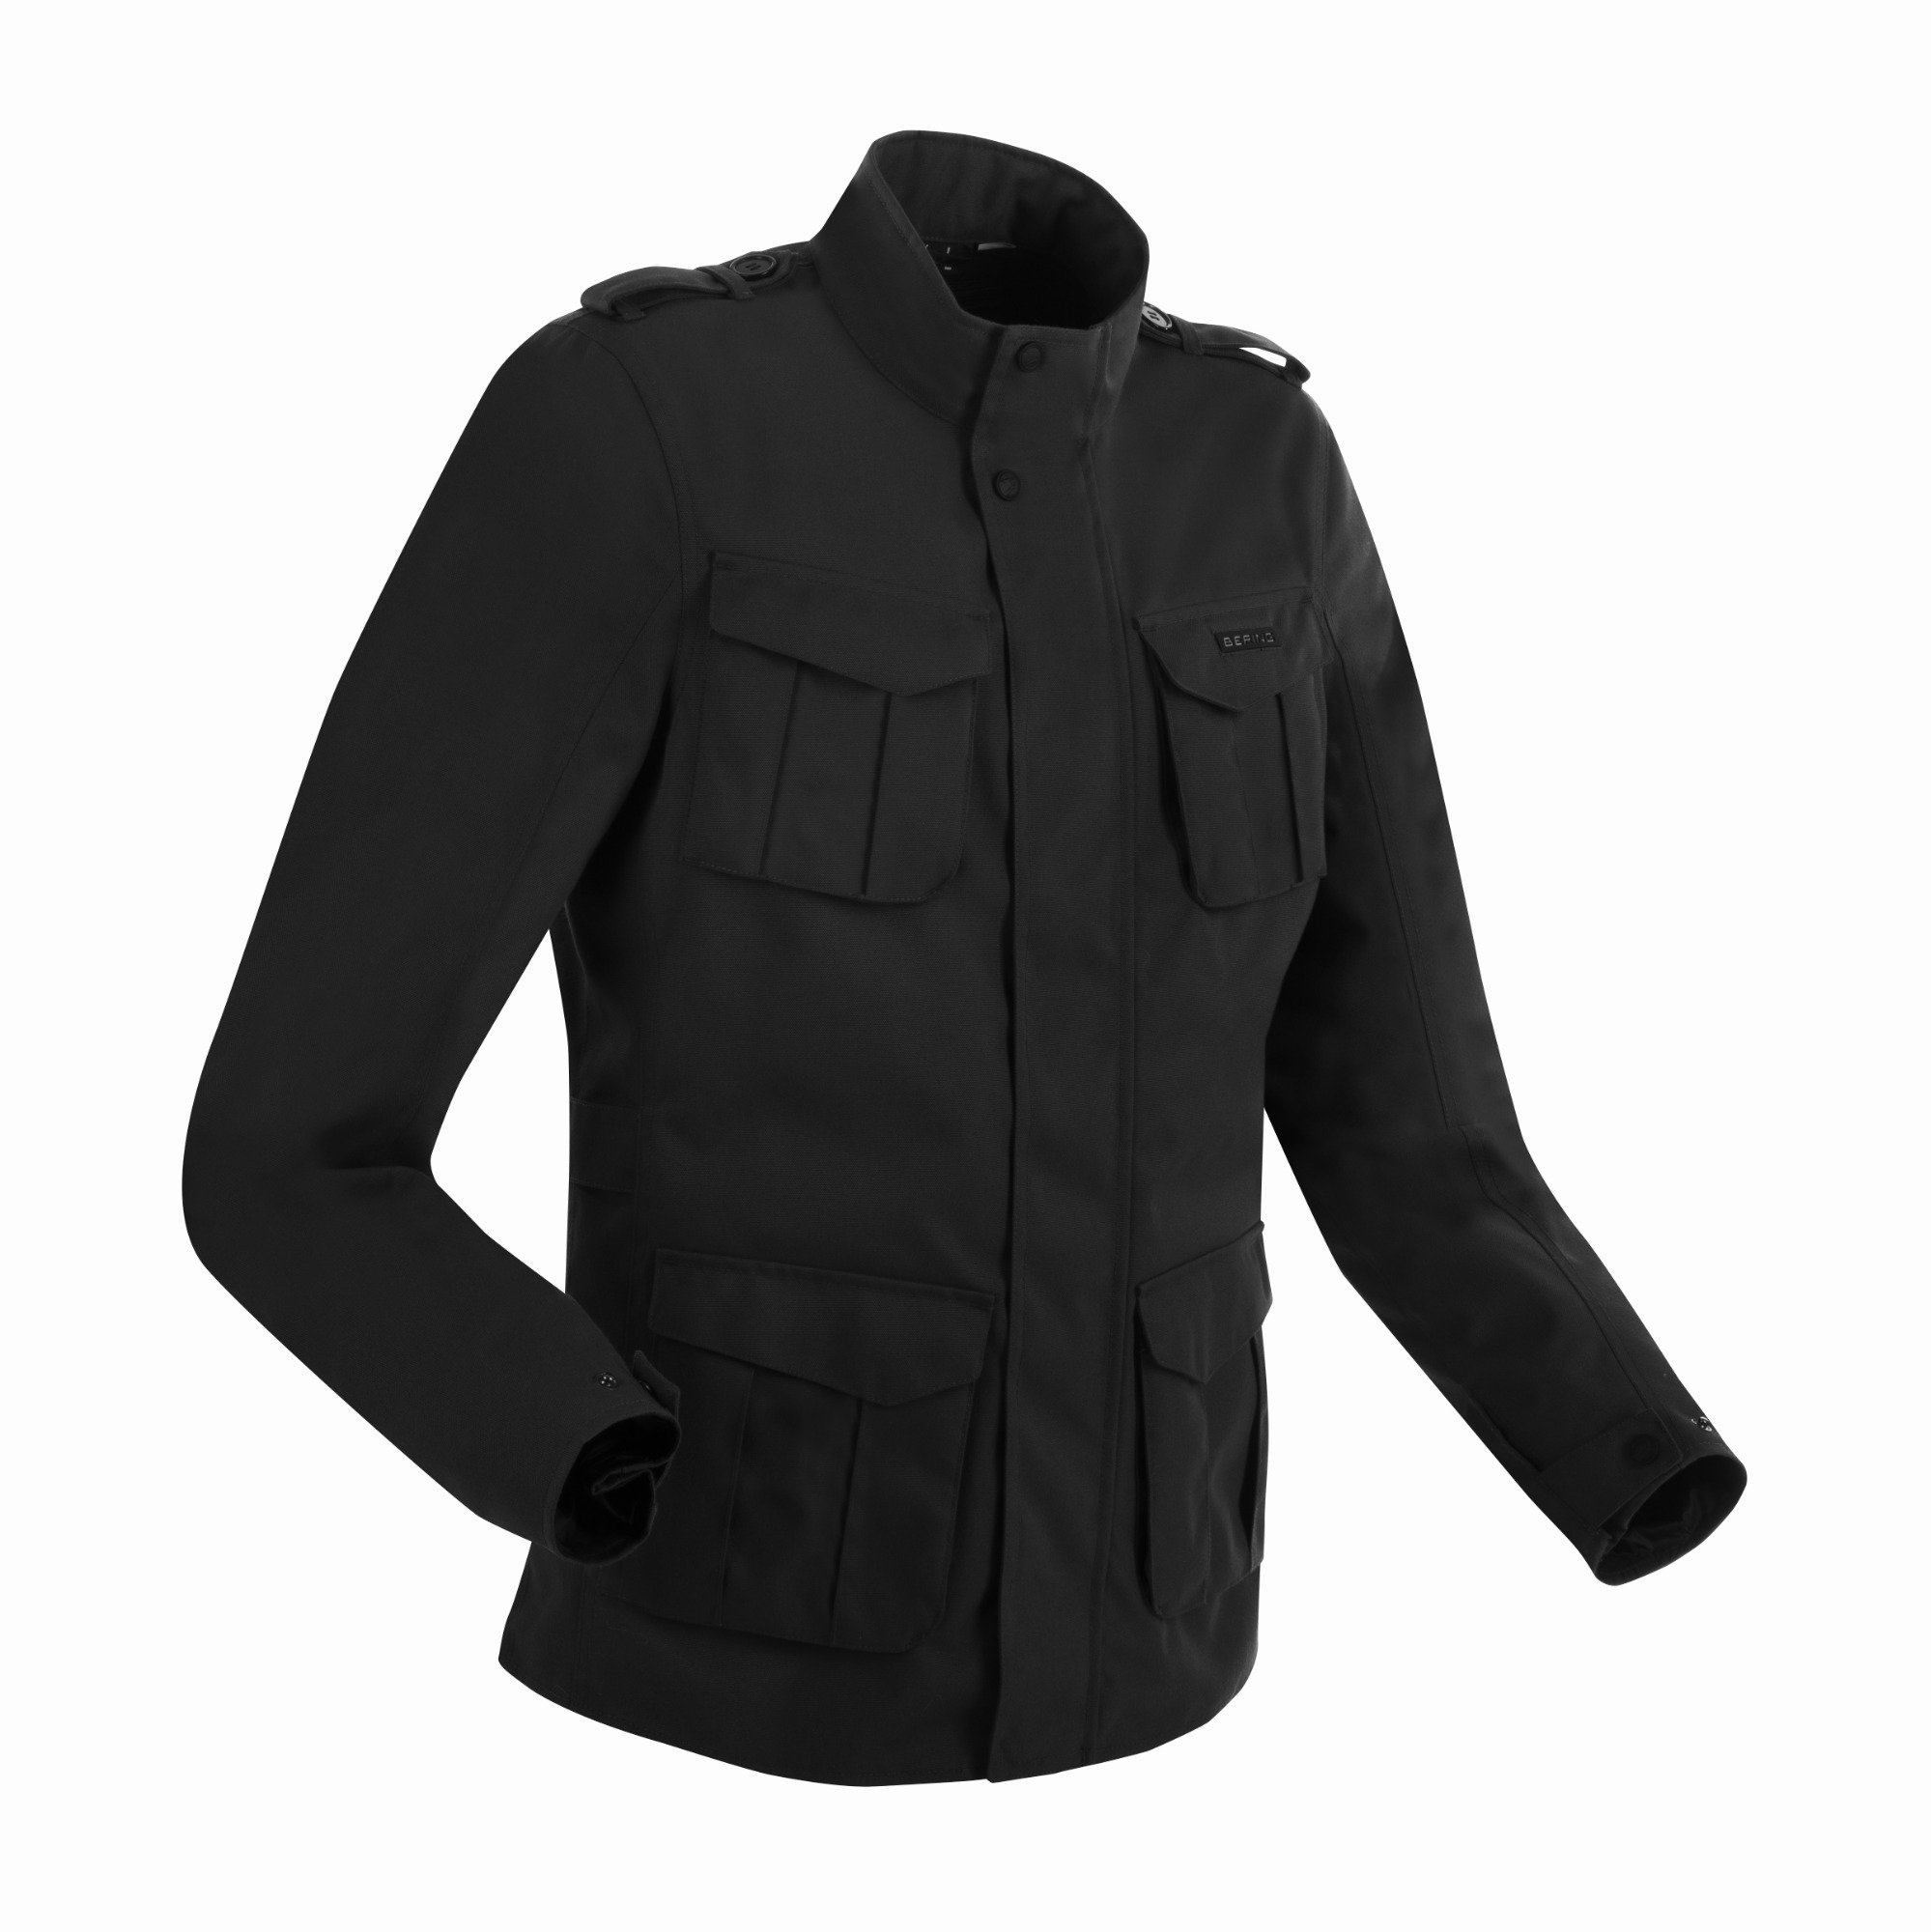 Image of Bering Norris Evo Jacket Black Size S ID 3660815167878